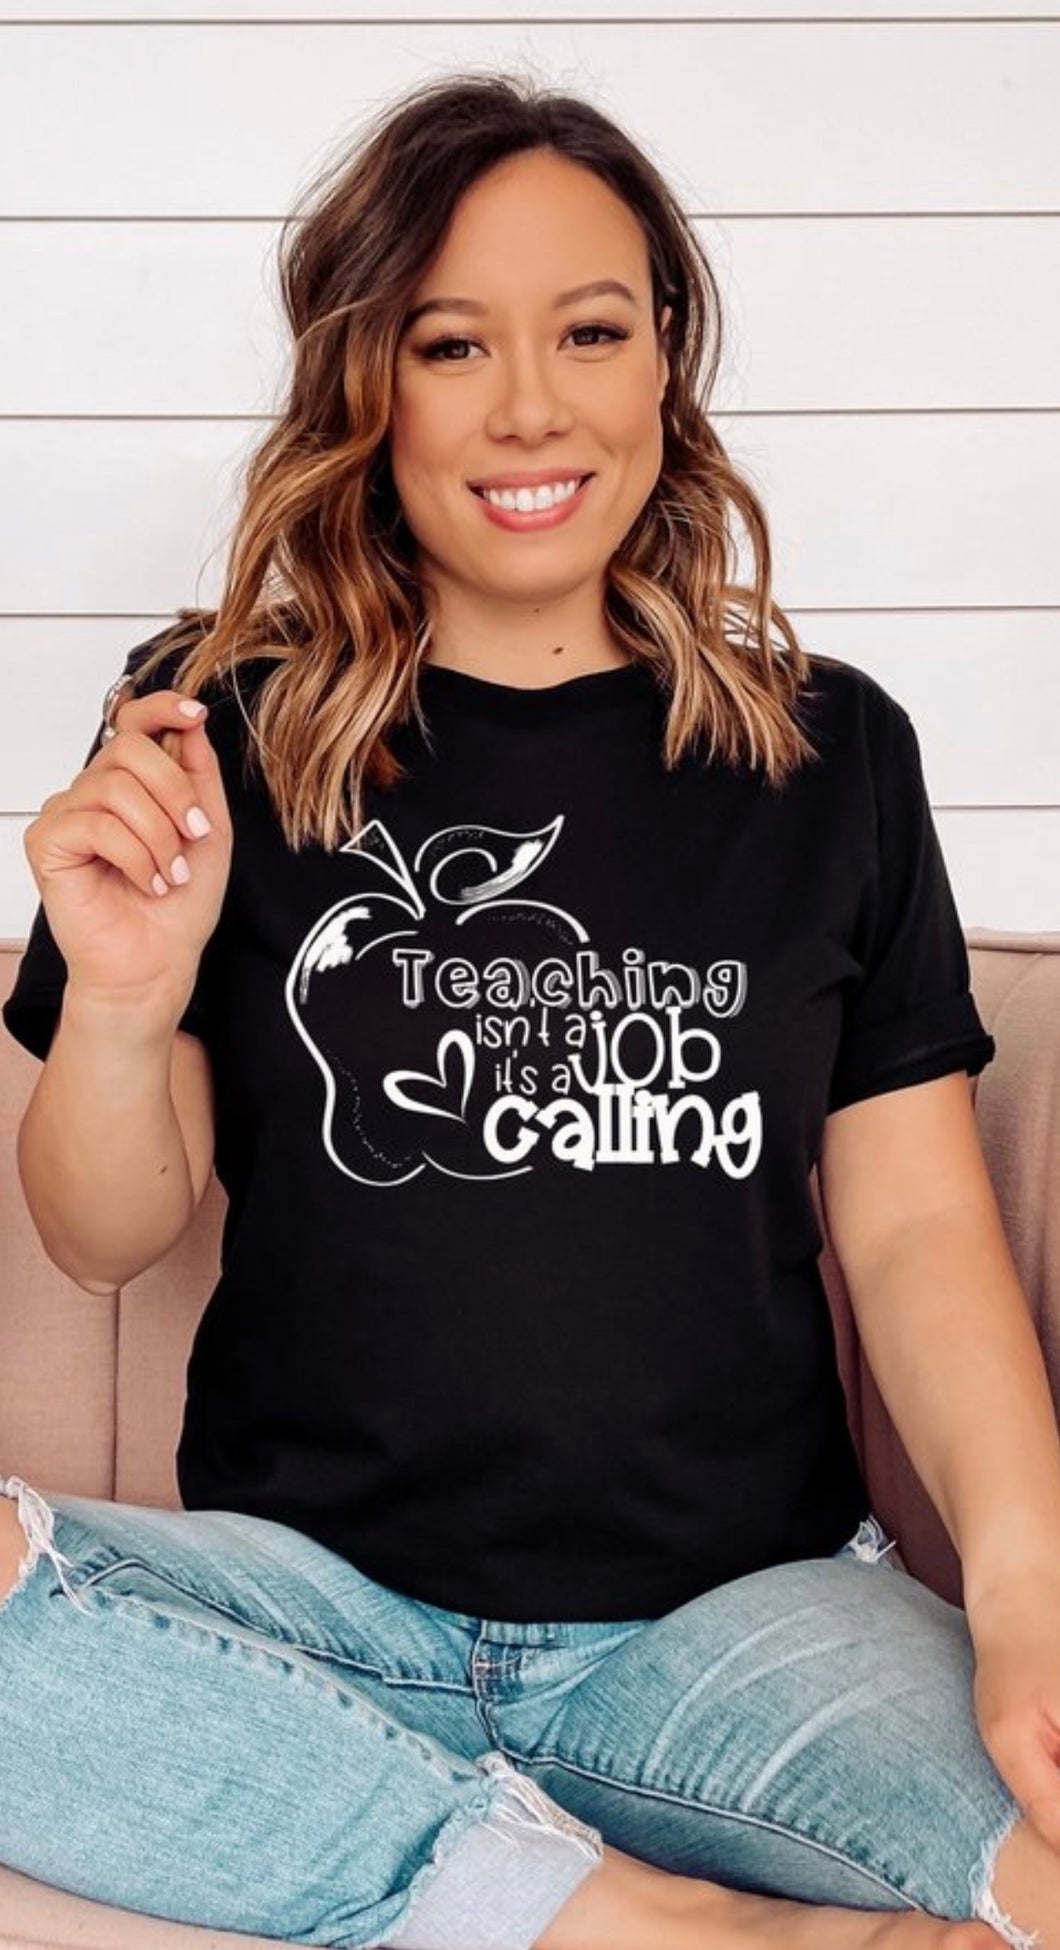 Teaching isn’t a job it’s a calling